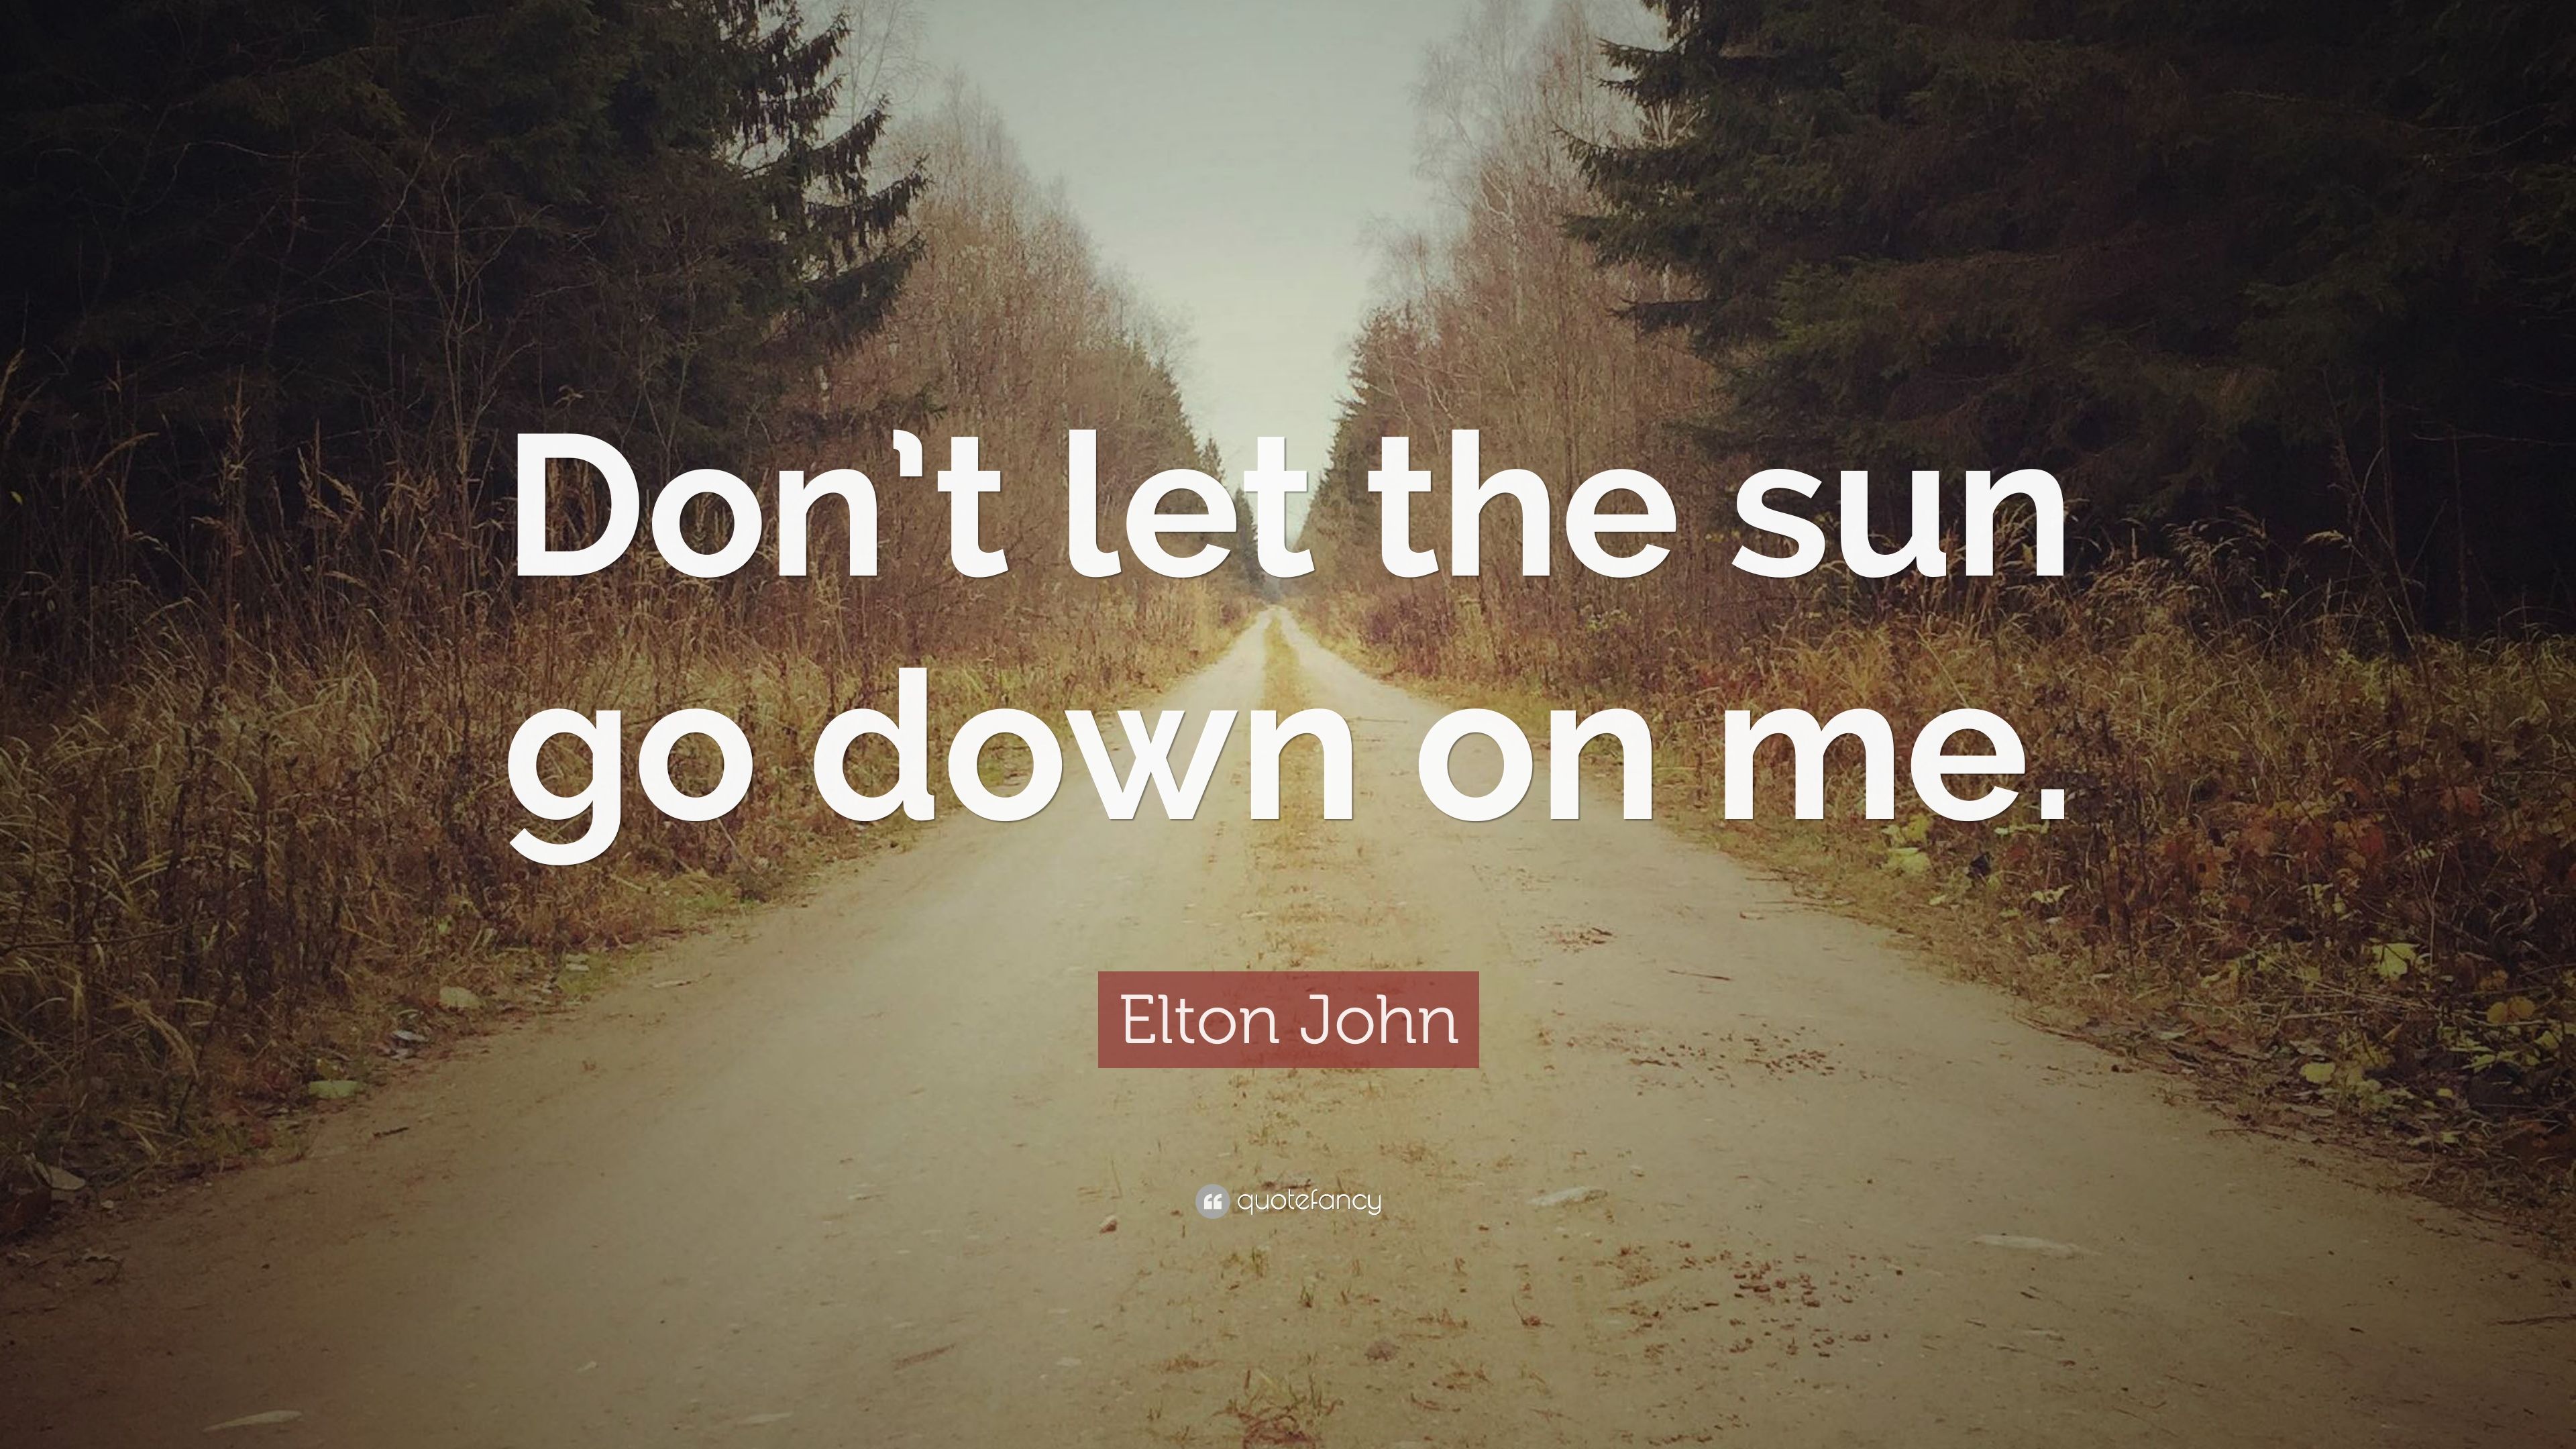 Elton John Quote: “Don't let the sun go down on me.” (12 wallpaper)